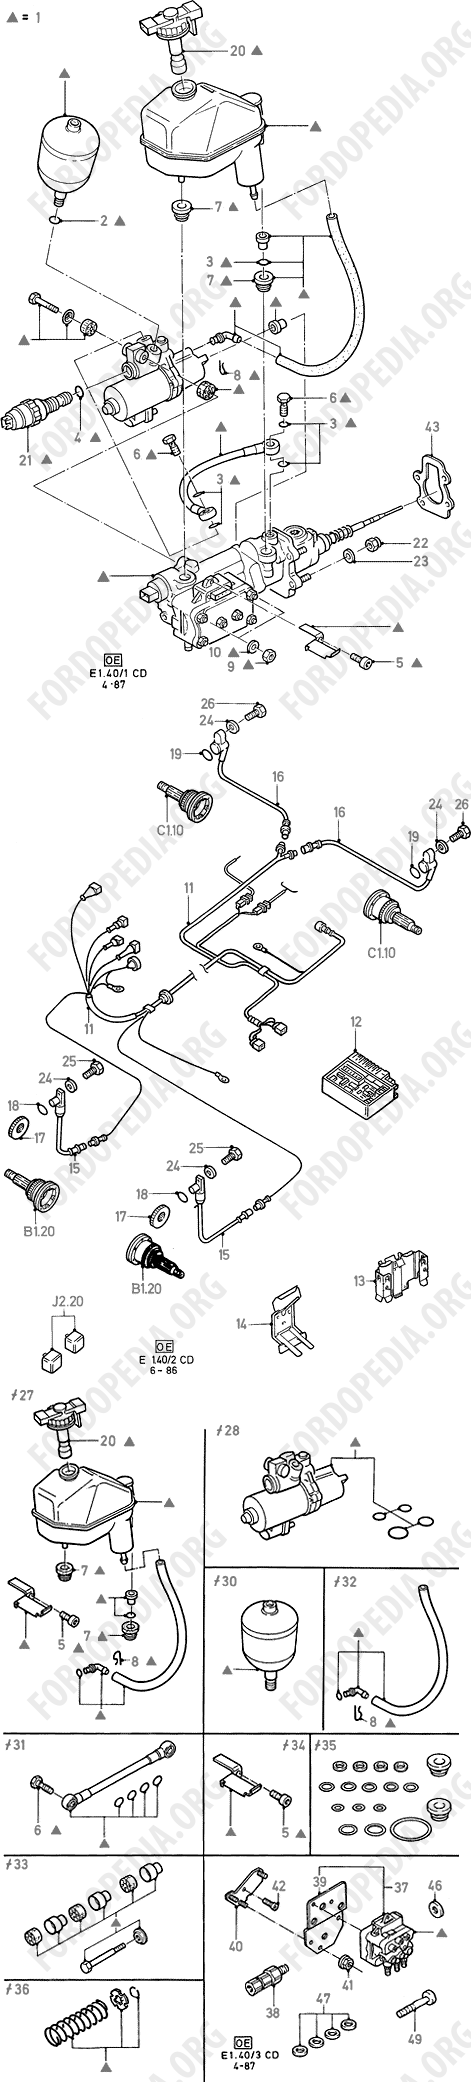 Ford Sierra MkI (1982-1986) - Anti-Lock Braking System  